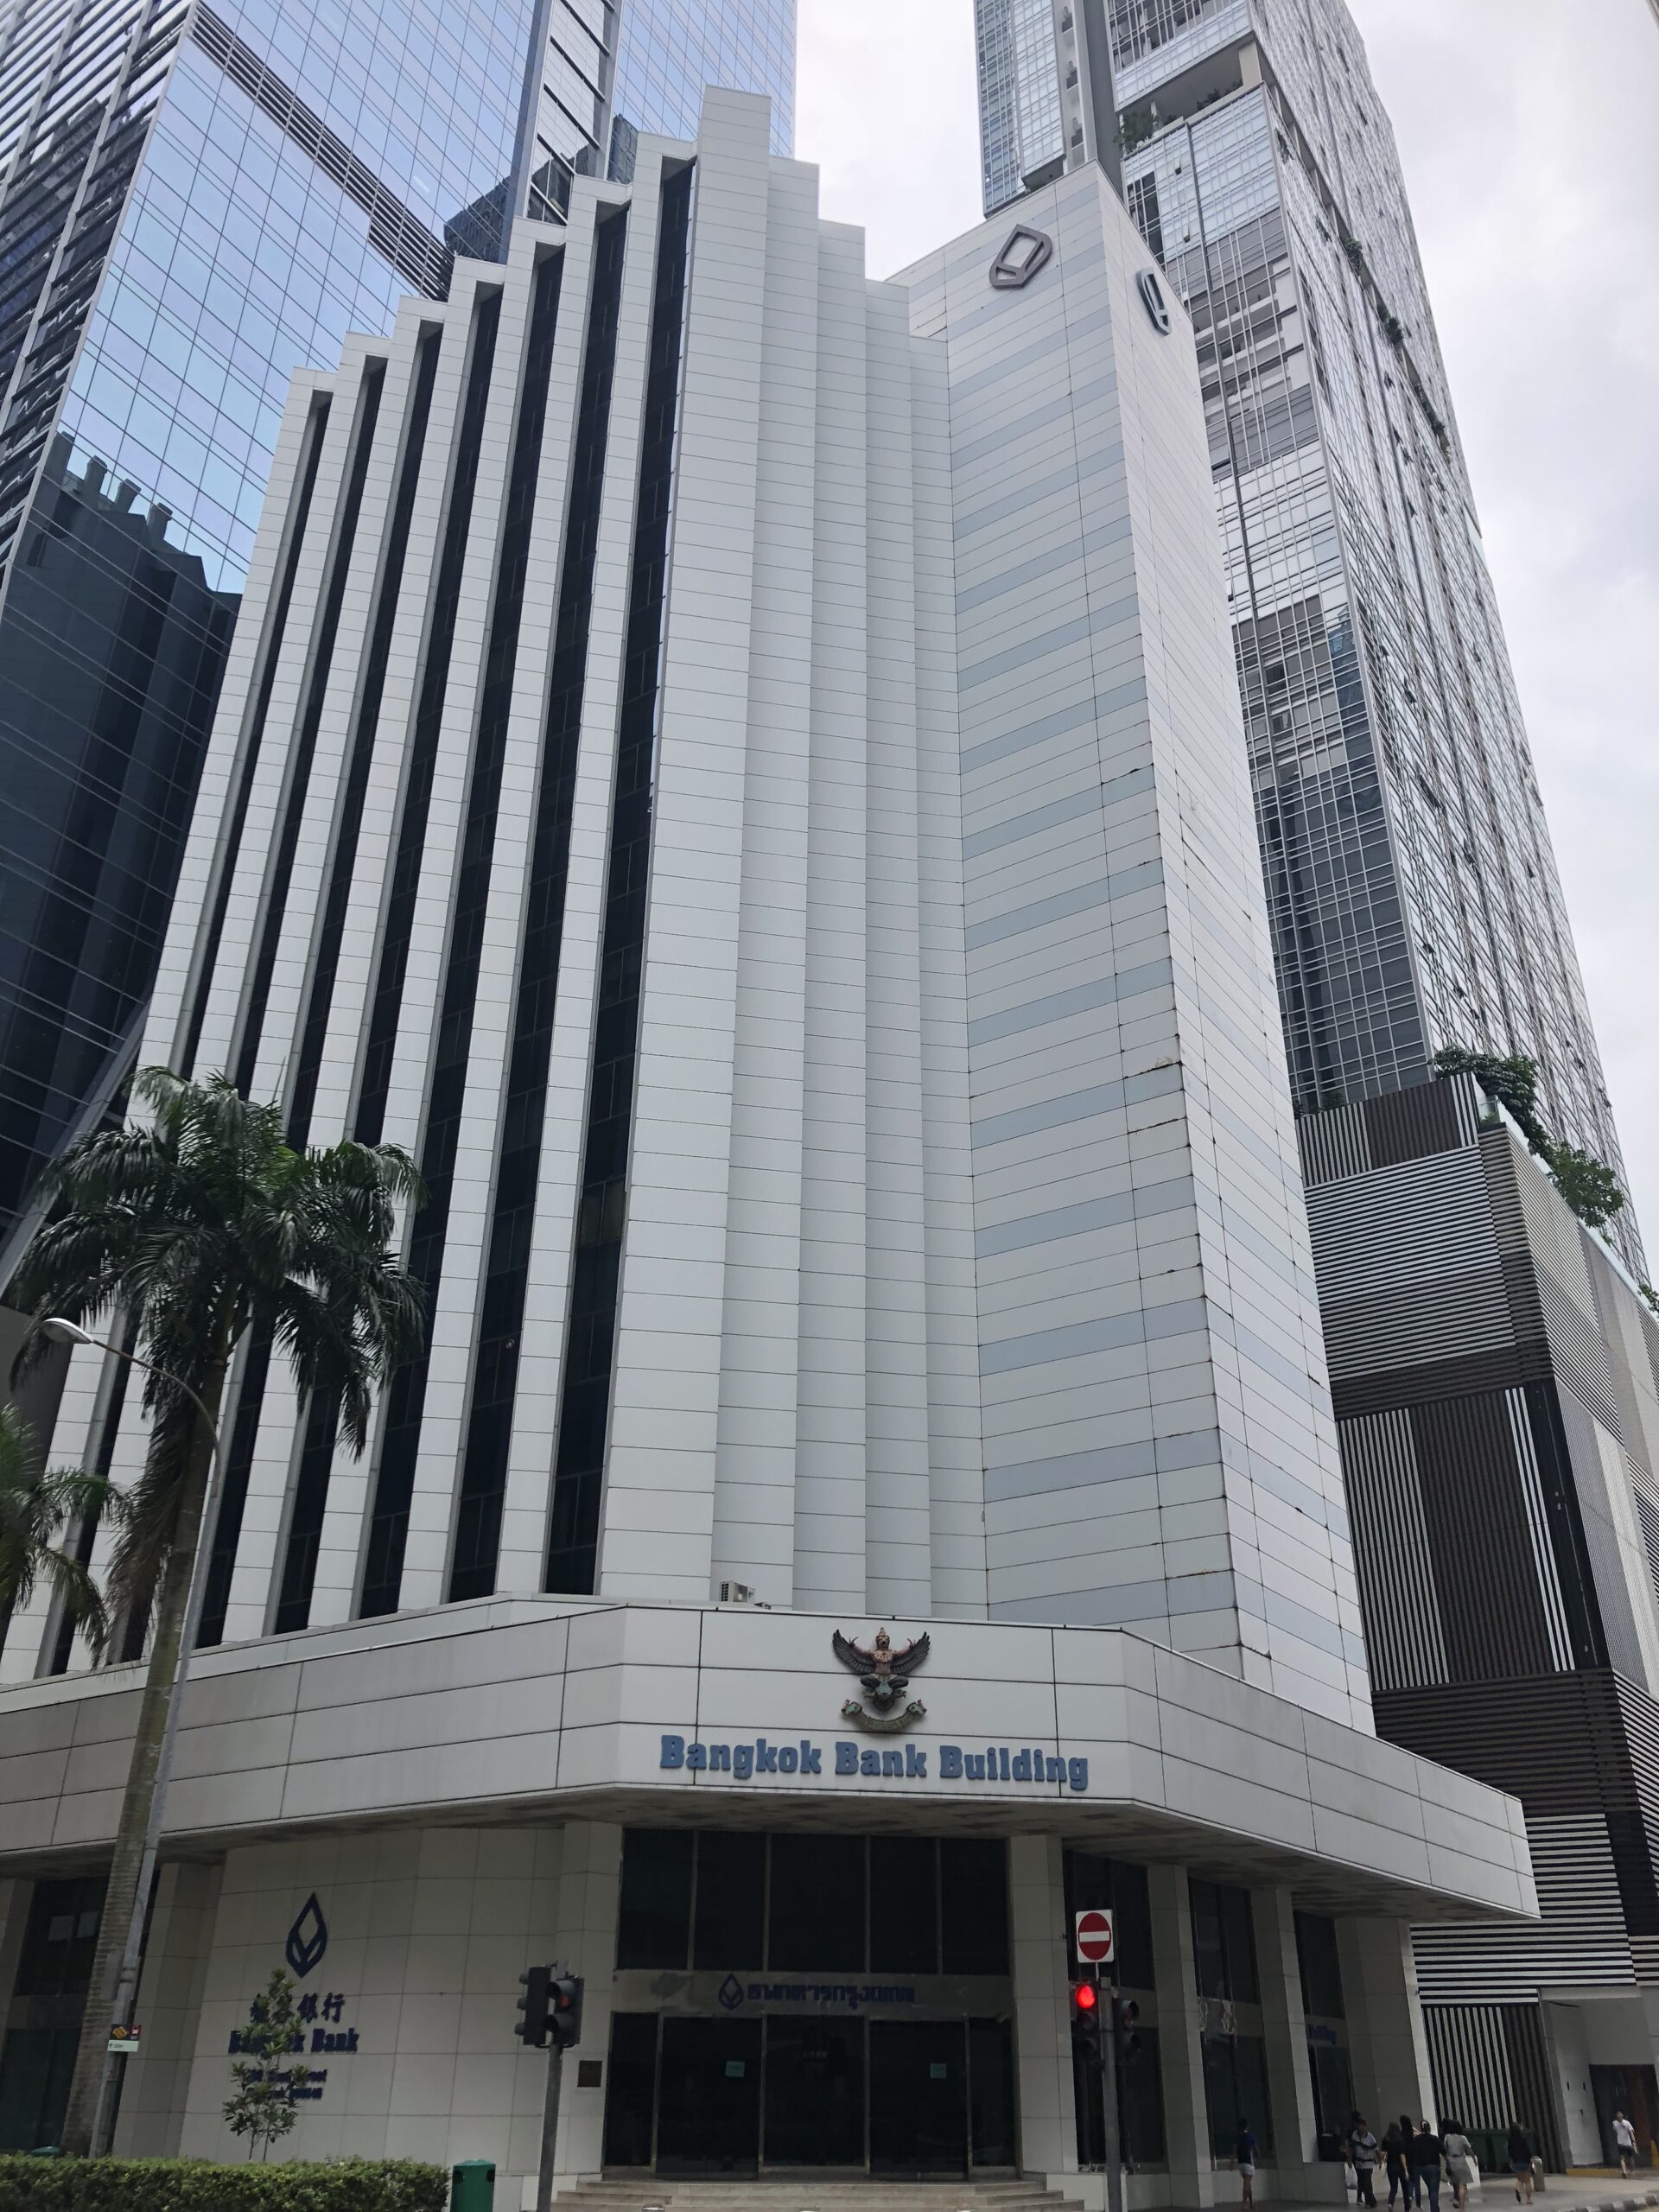 Bangkok Bank Building - Singapore Office